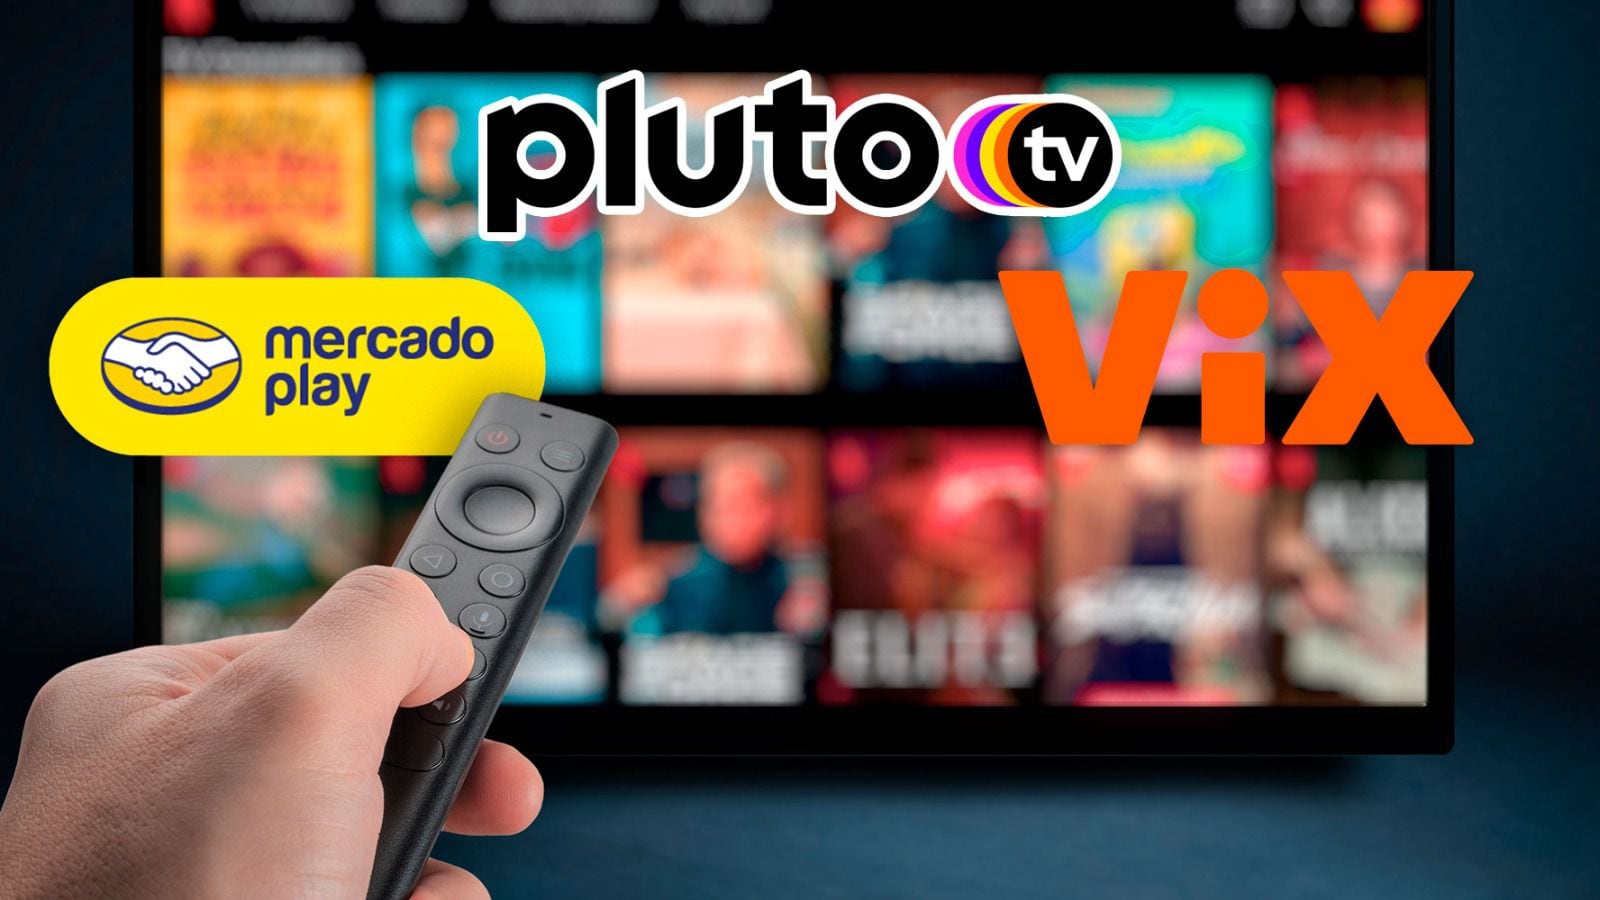 Mexicanos prefieren consumir servicios gratuitos de streaming de video